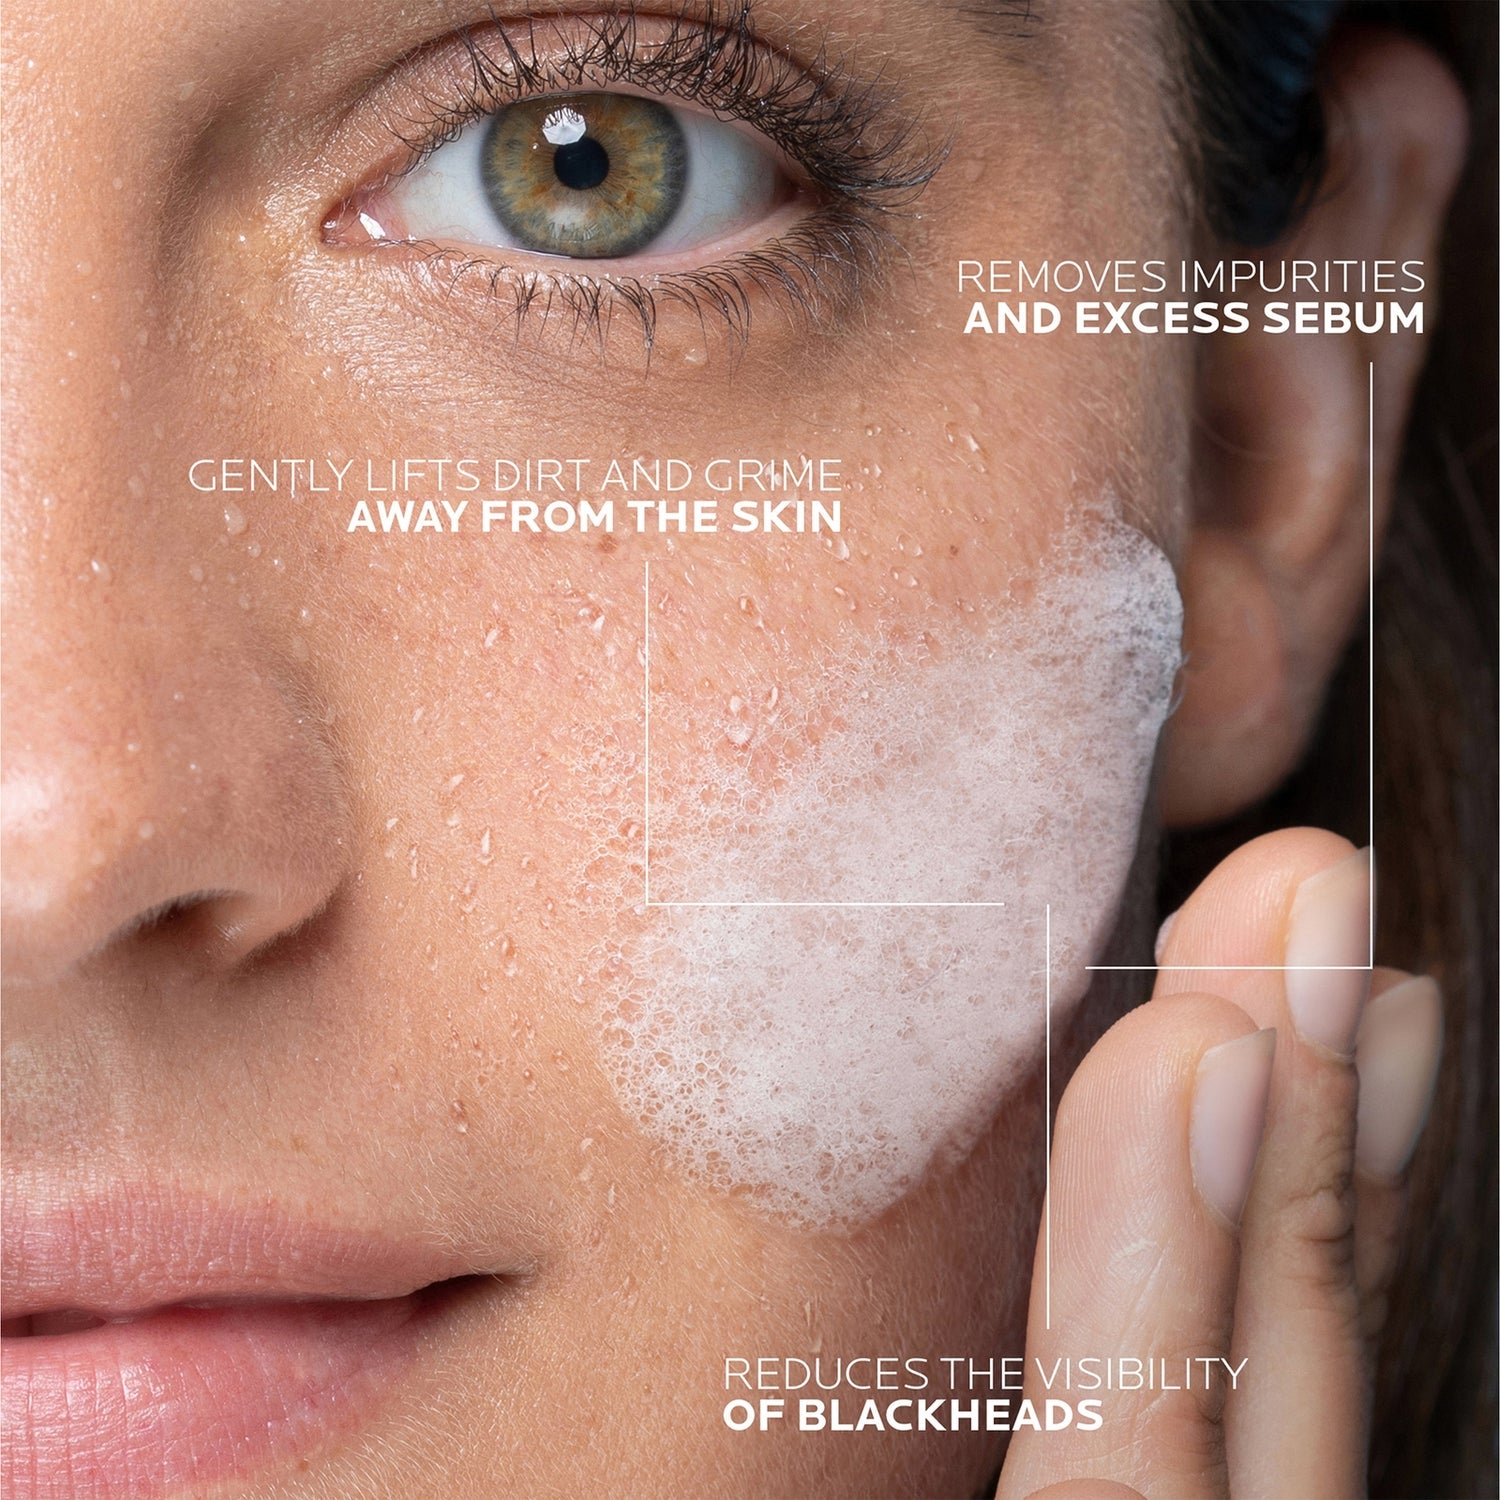 La Roche-Posay Effaclar Purifying Foaming Gel Cleanser for Oily, Blemish-Prone Skin